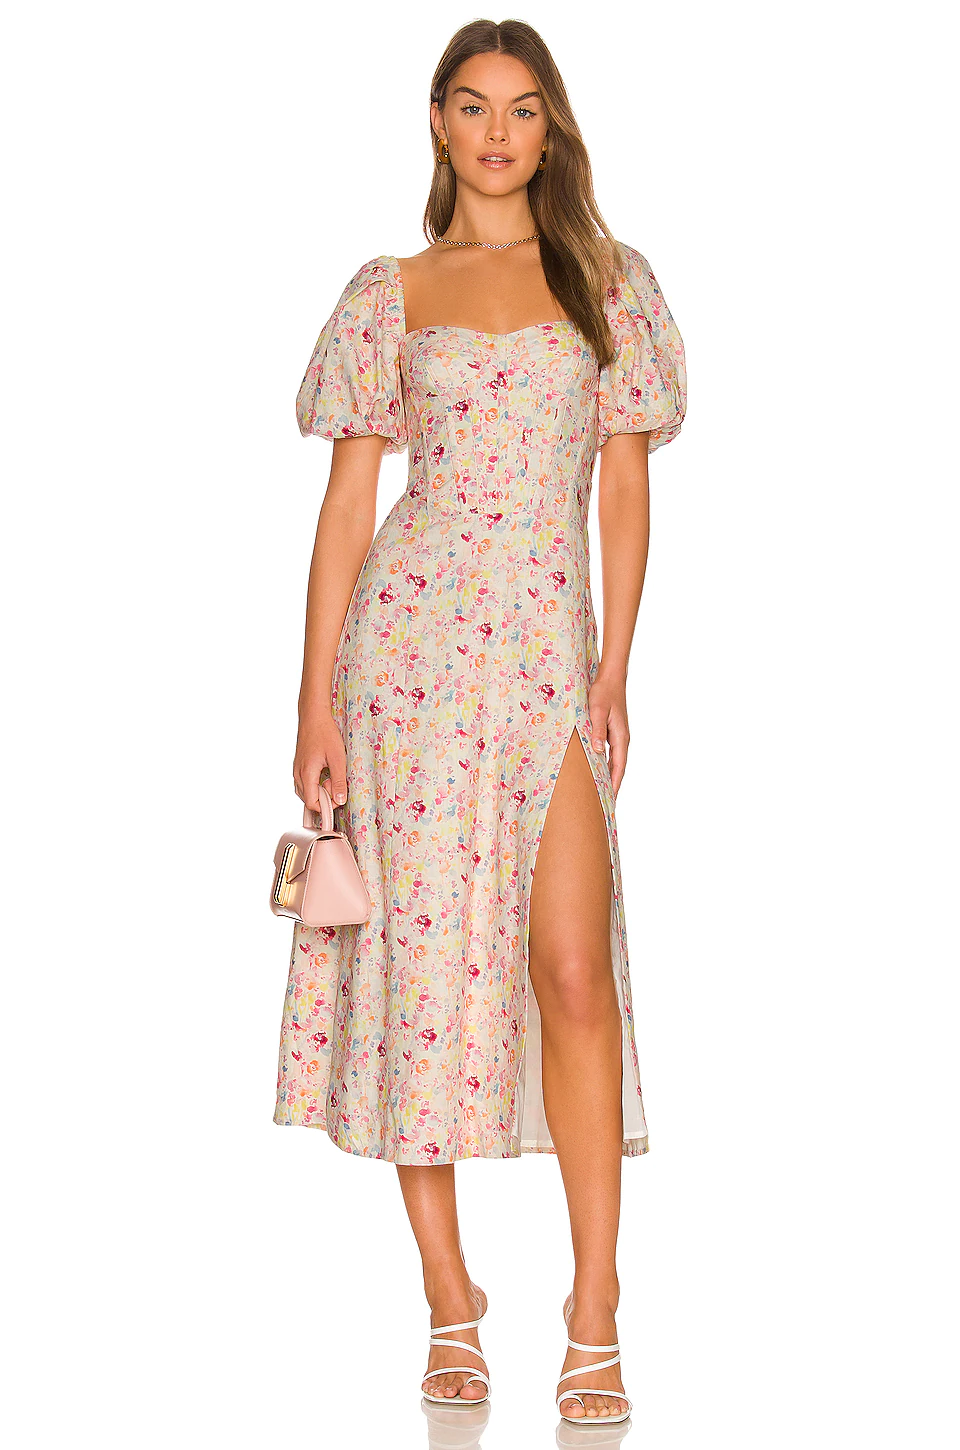 Bardot x REVOLVE Floral Dress in Paint Floral